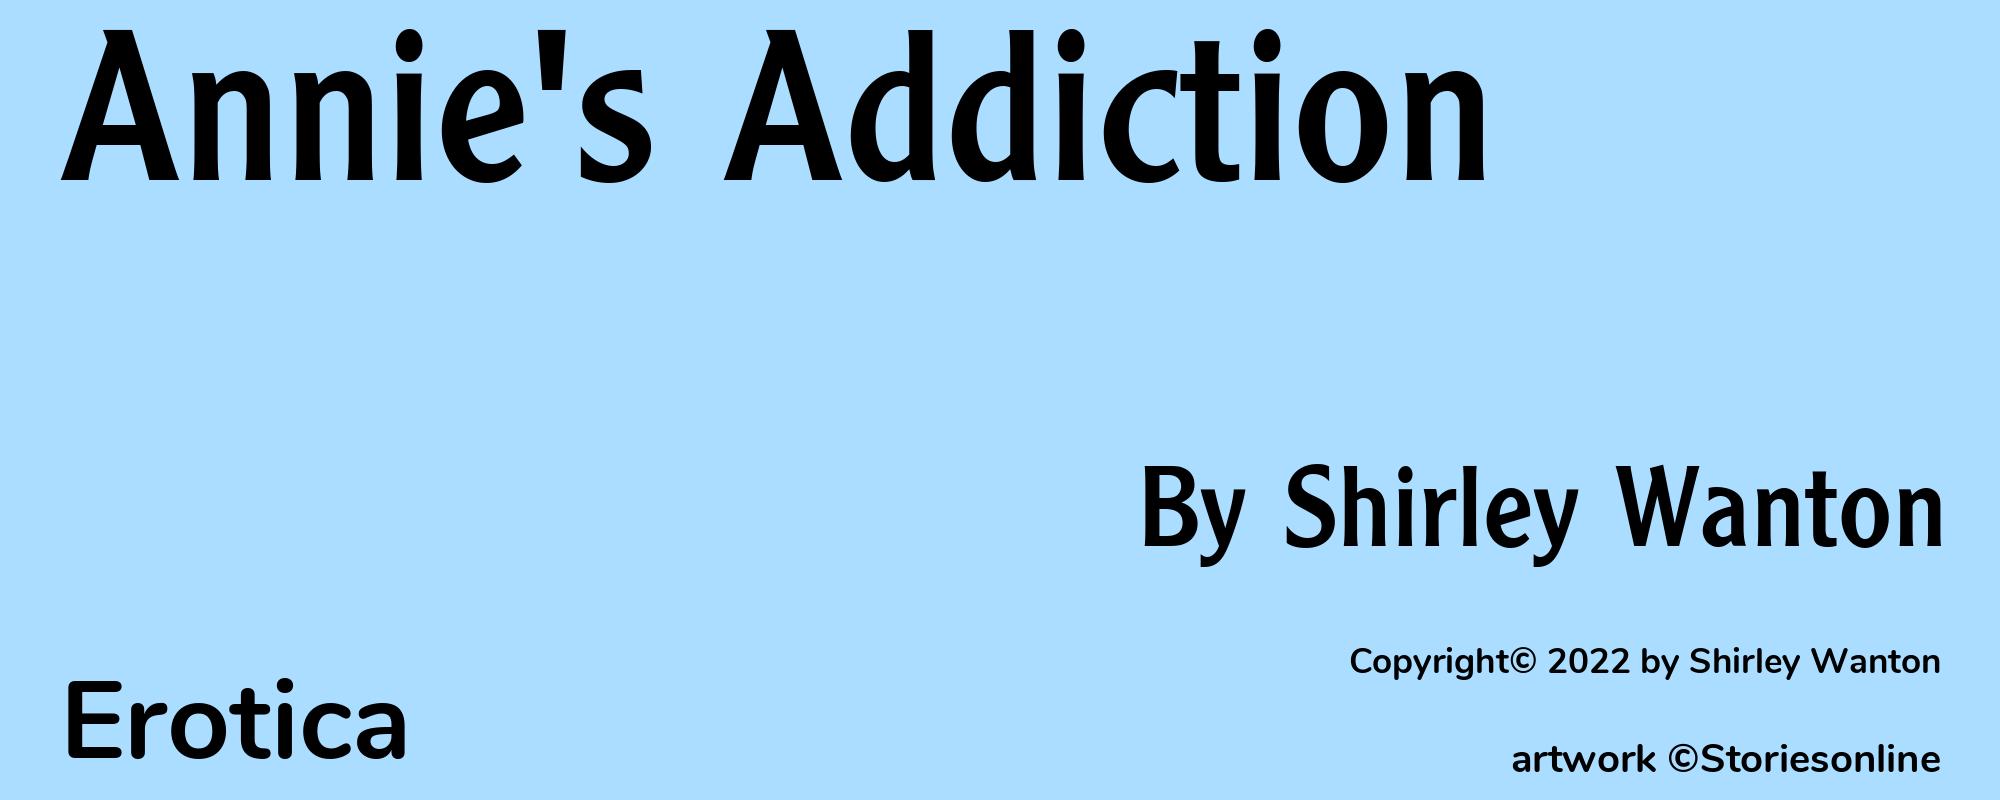 Annie's Addiction - Cover